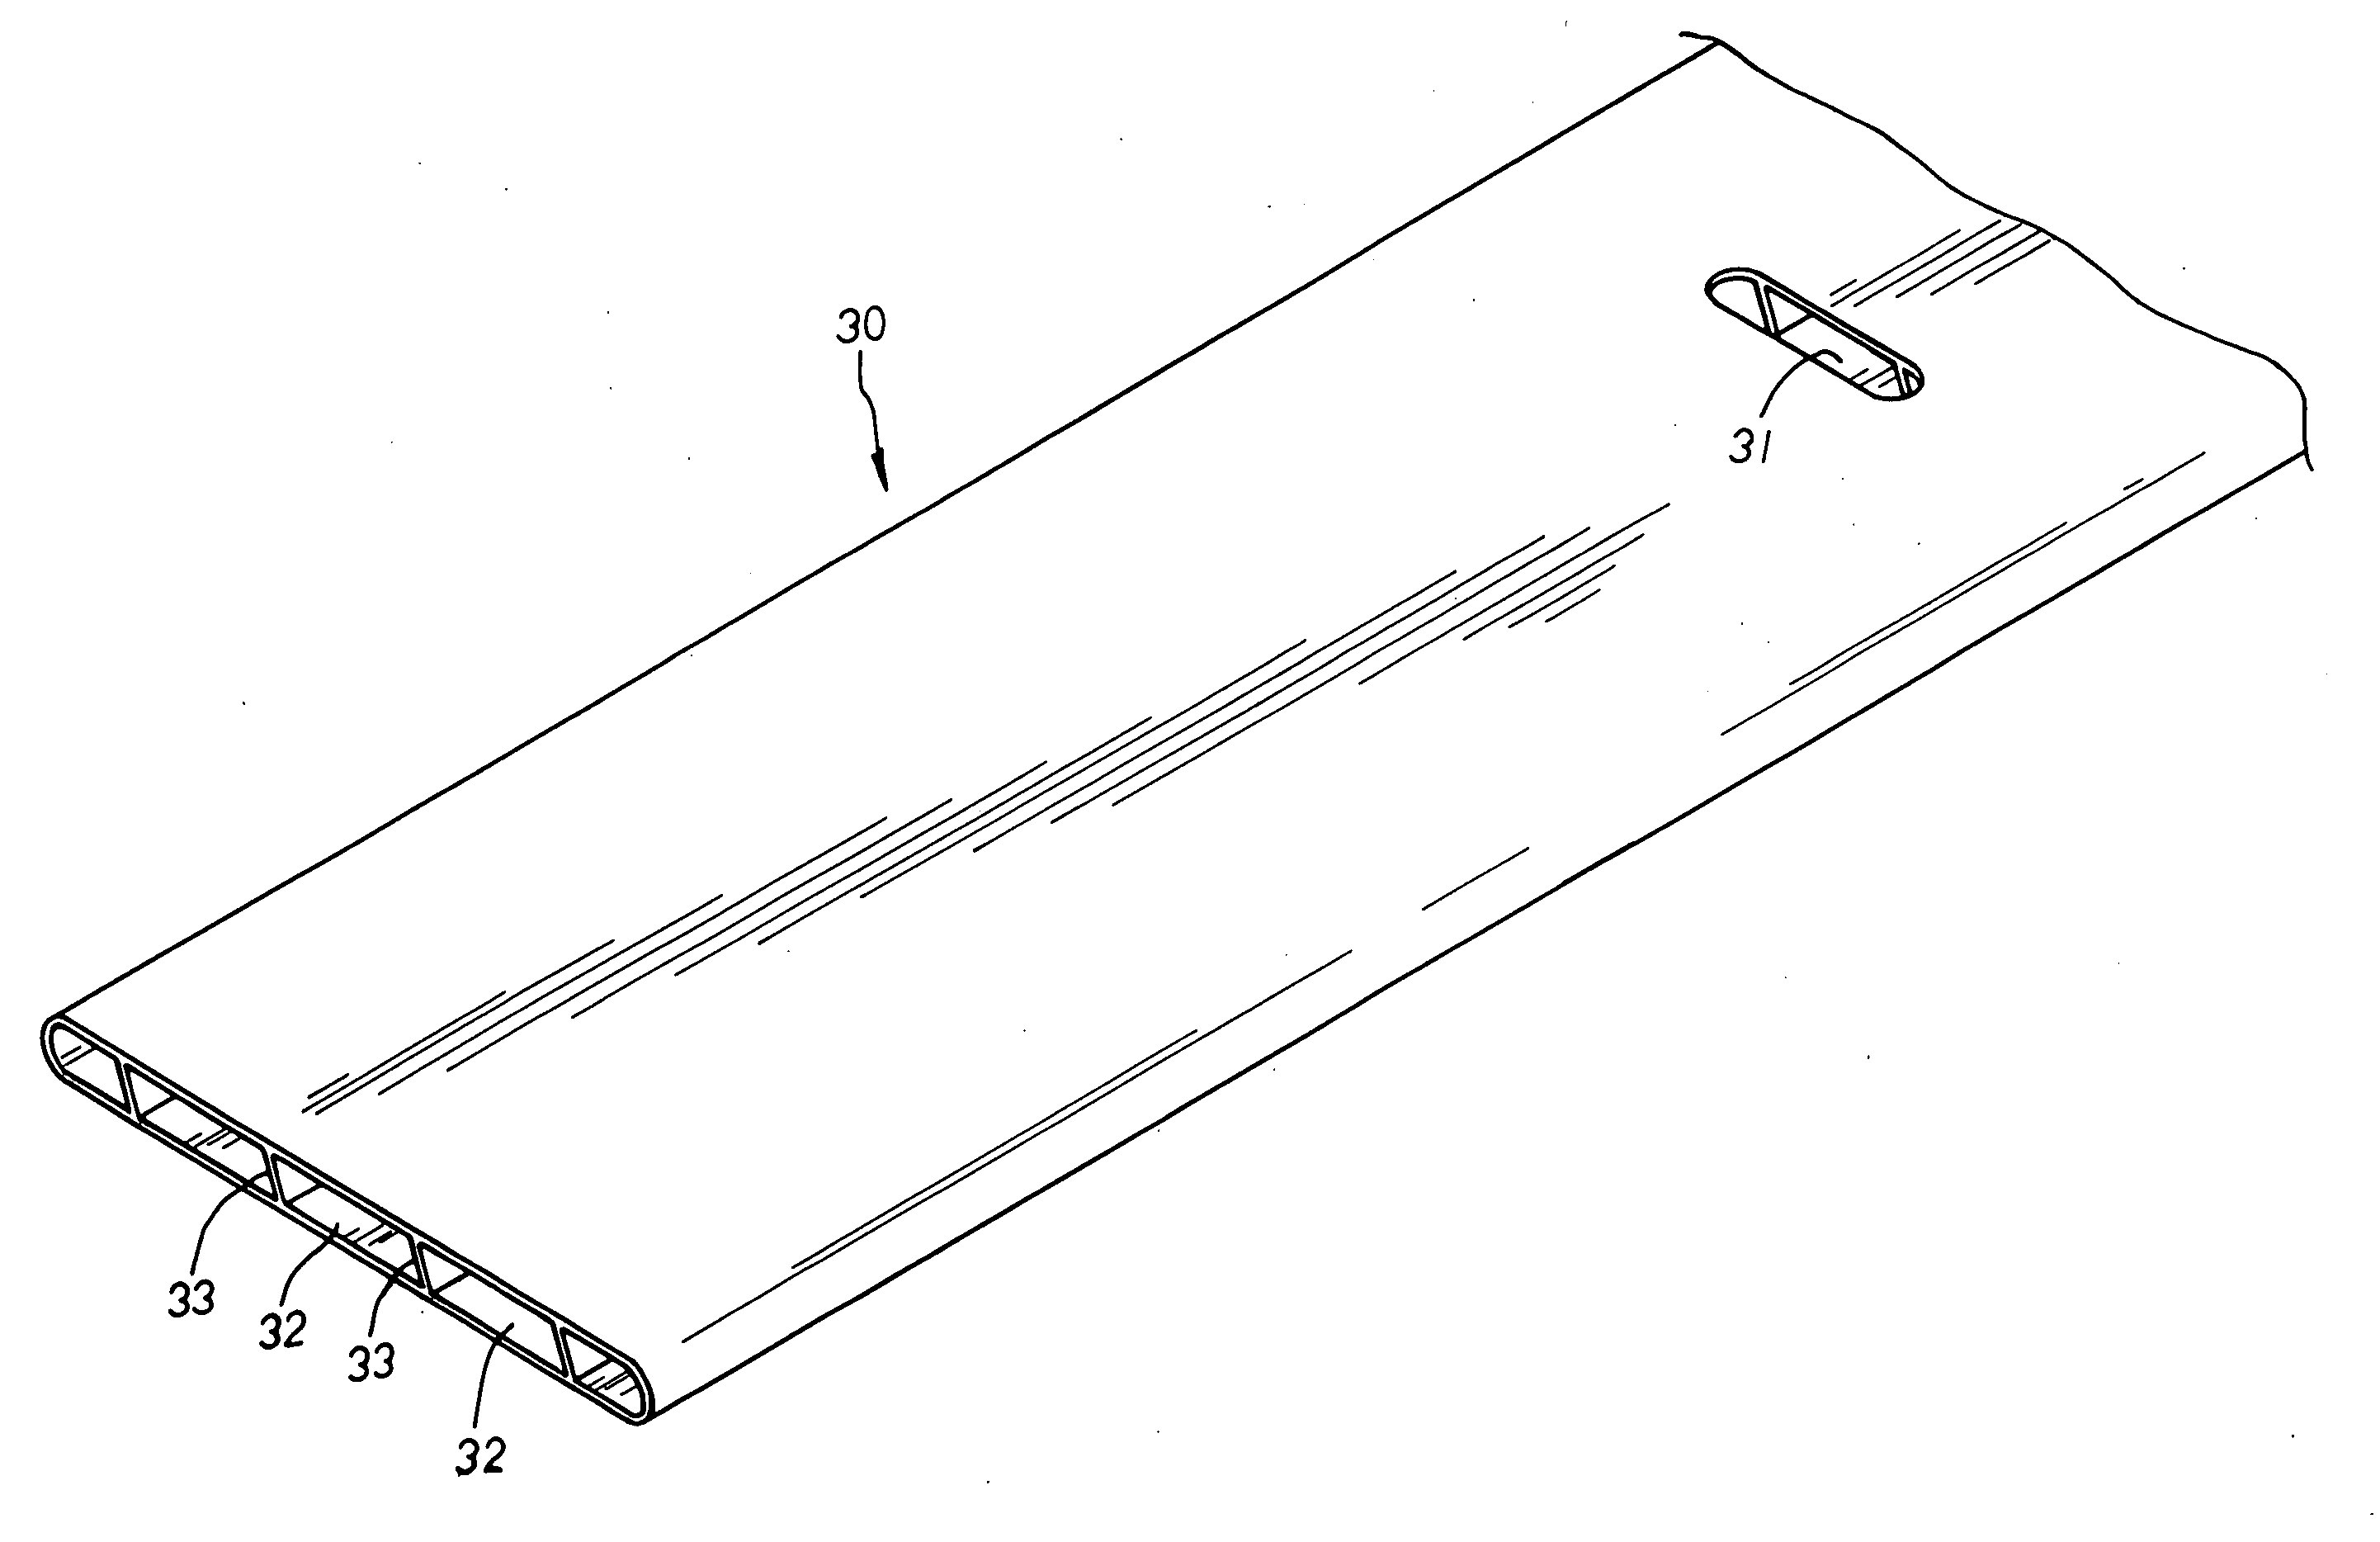 Slat structure for venetian blinds